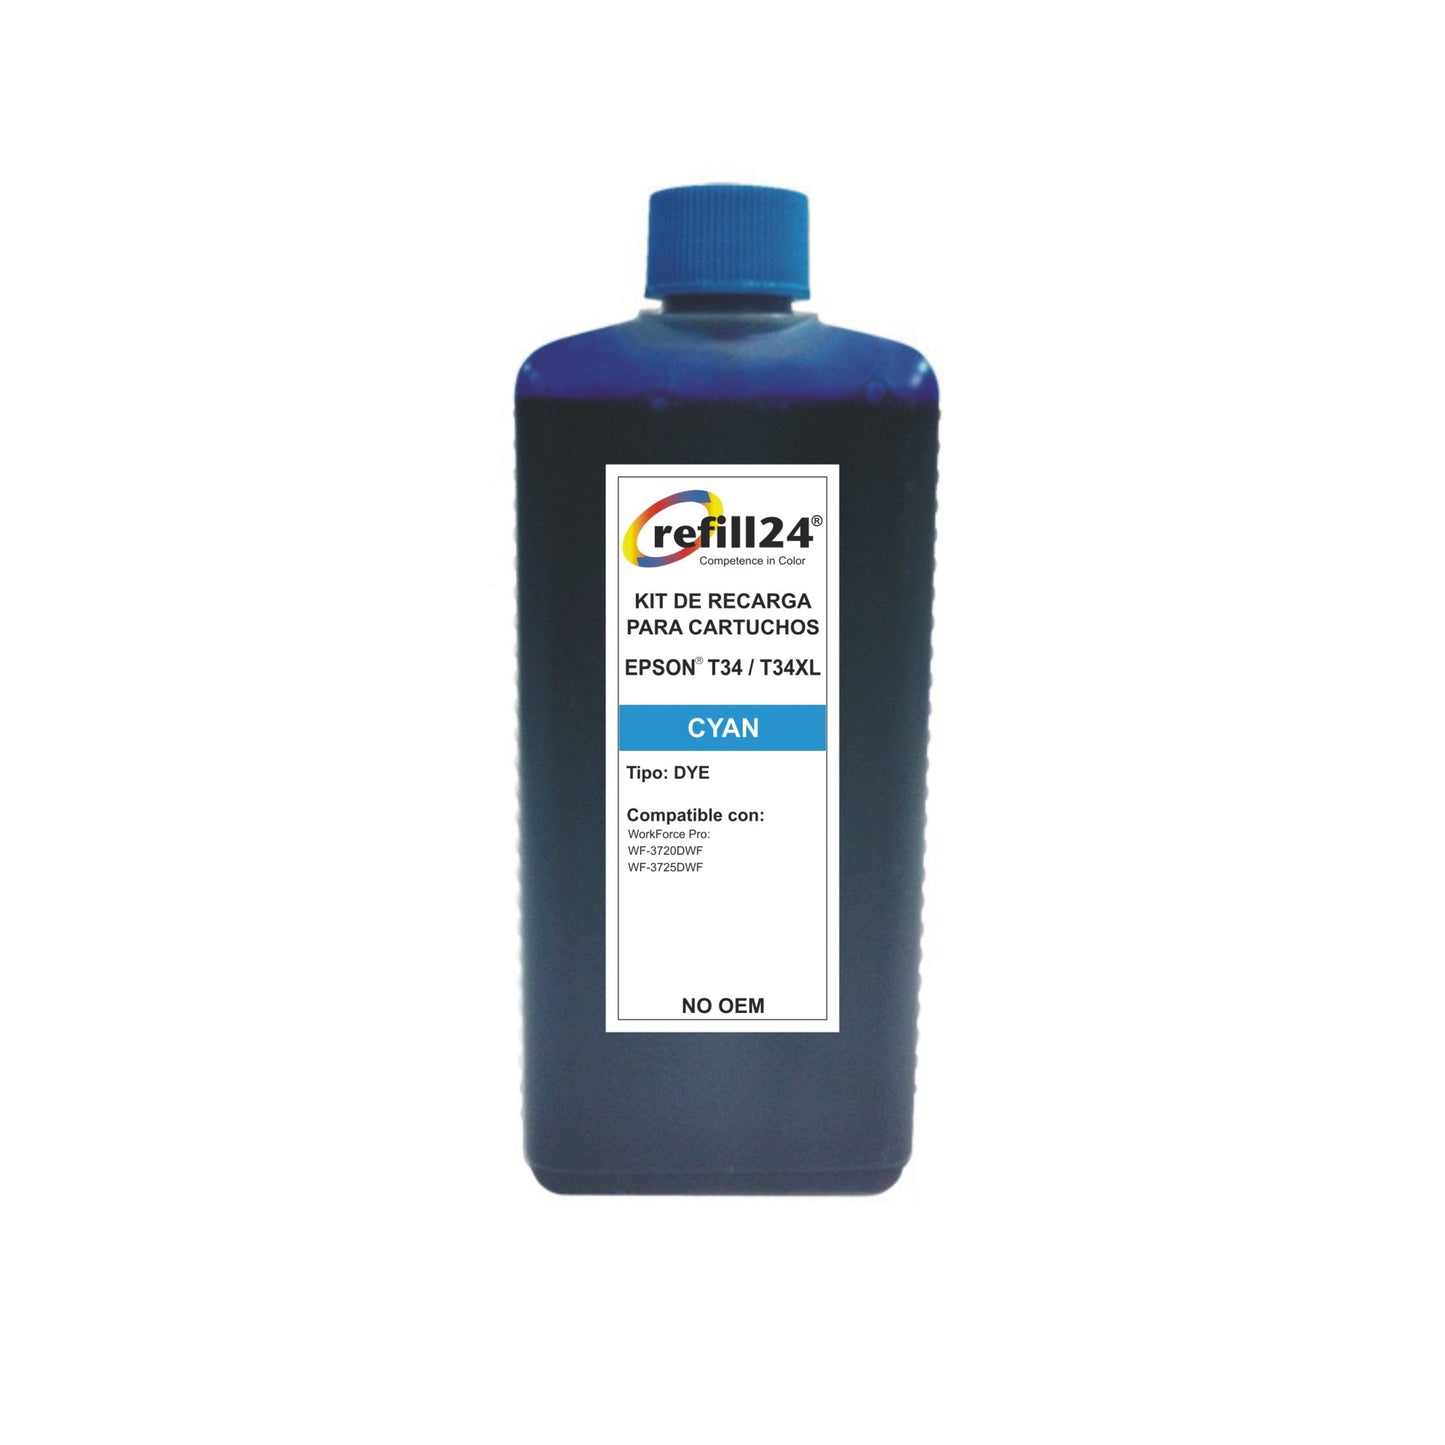 Tinta Premium Refill 24® para cartuchos Epson T34/T34XL